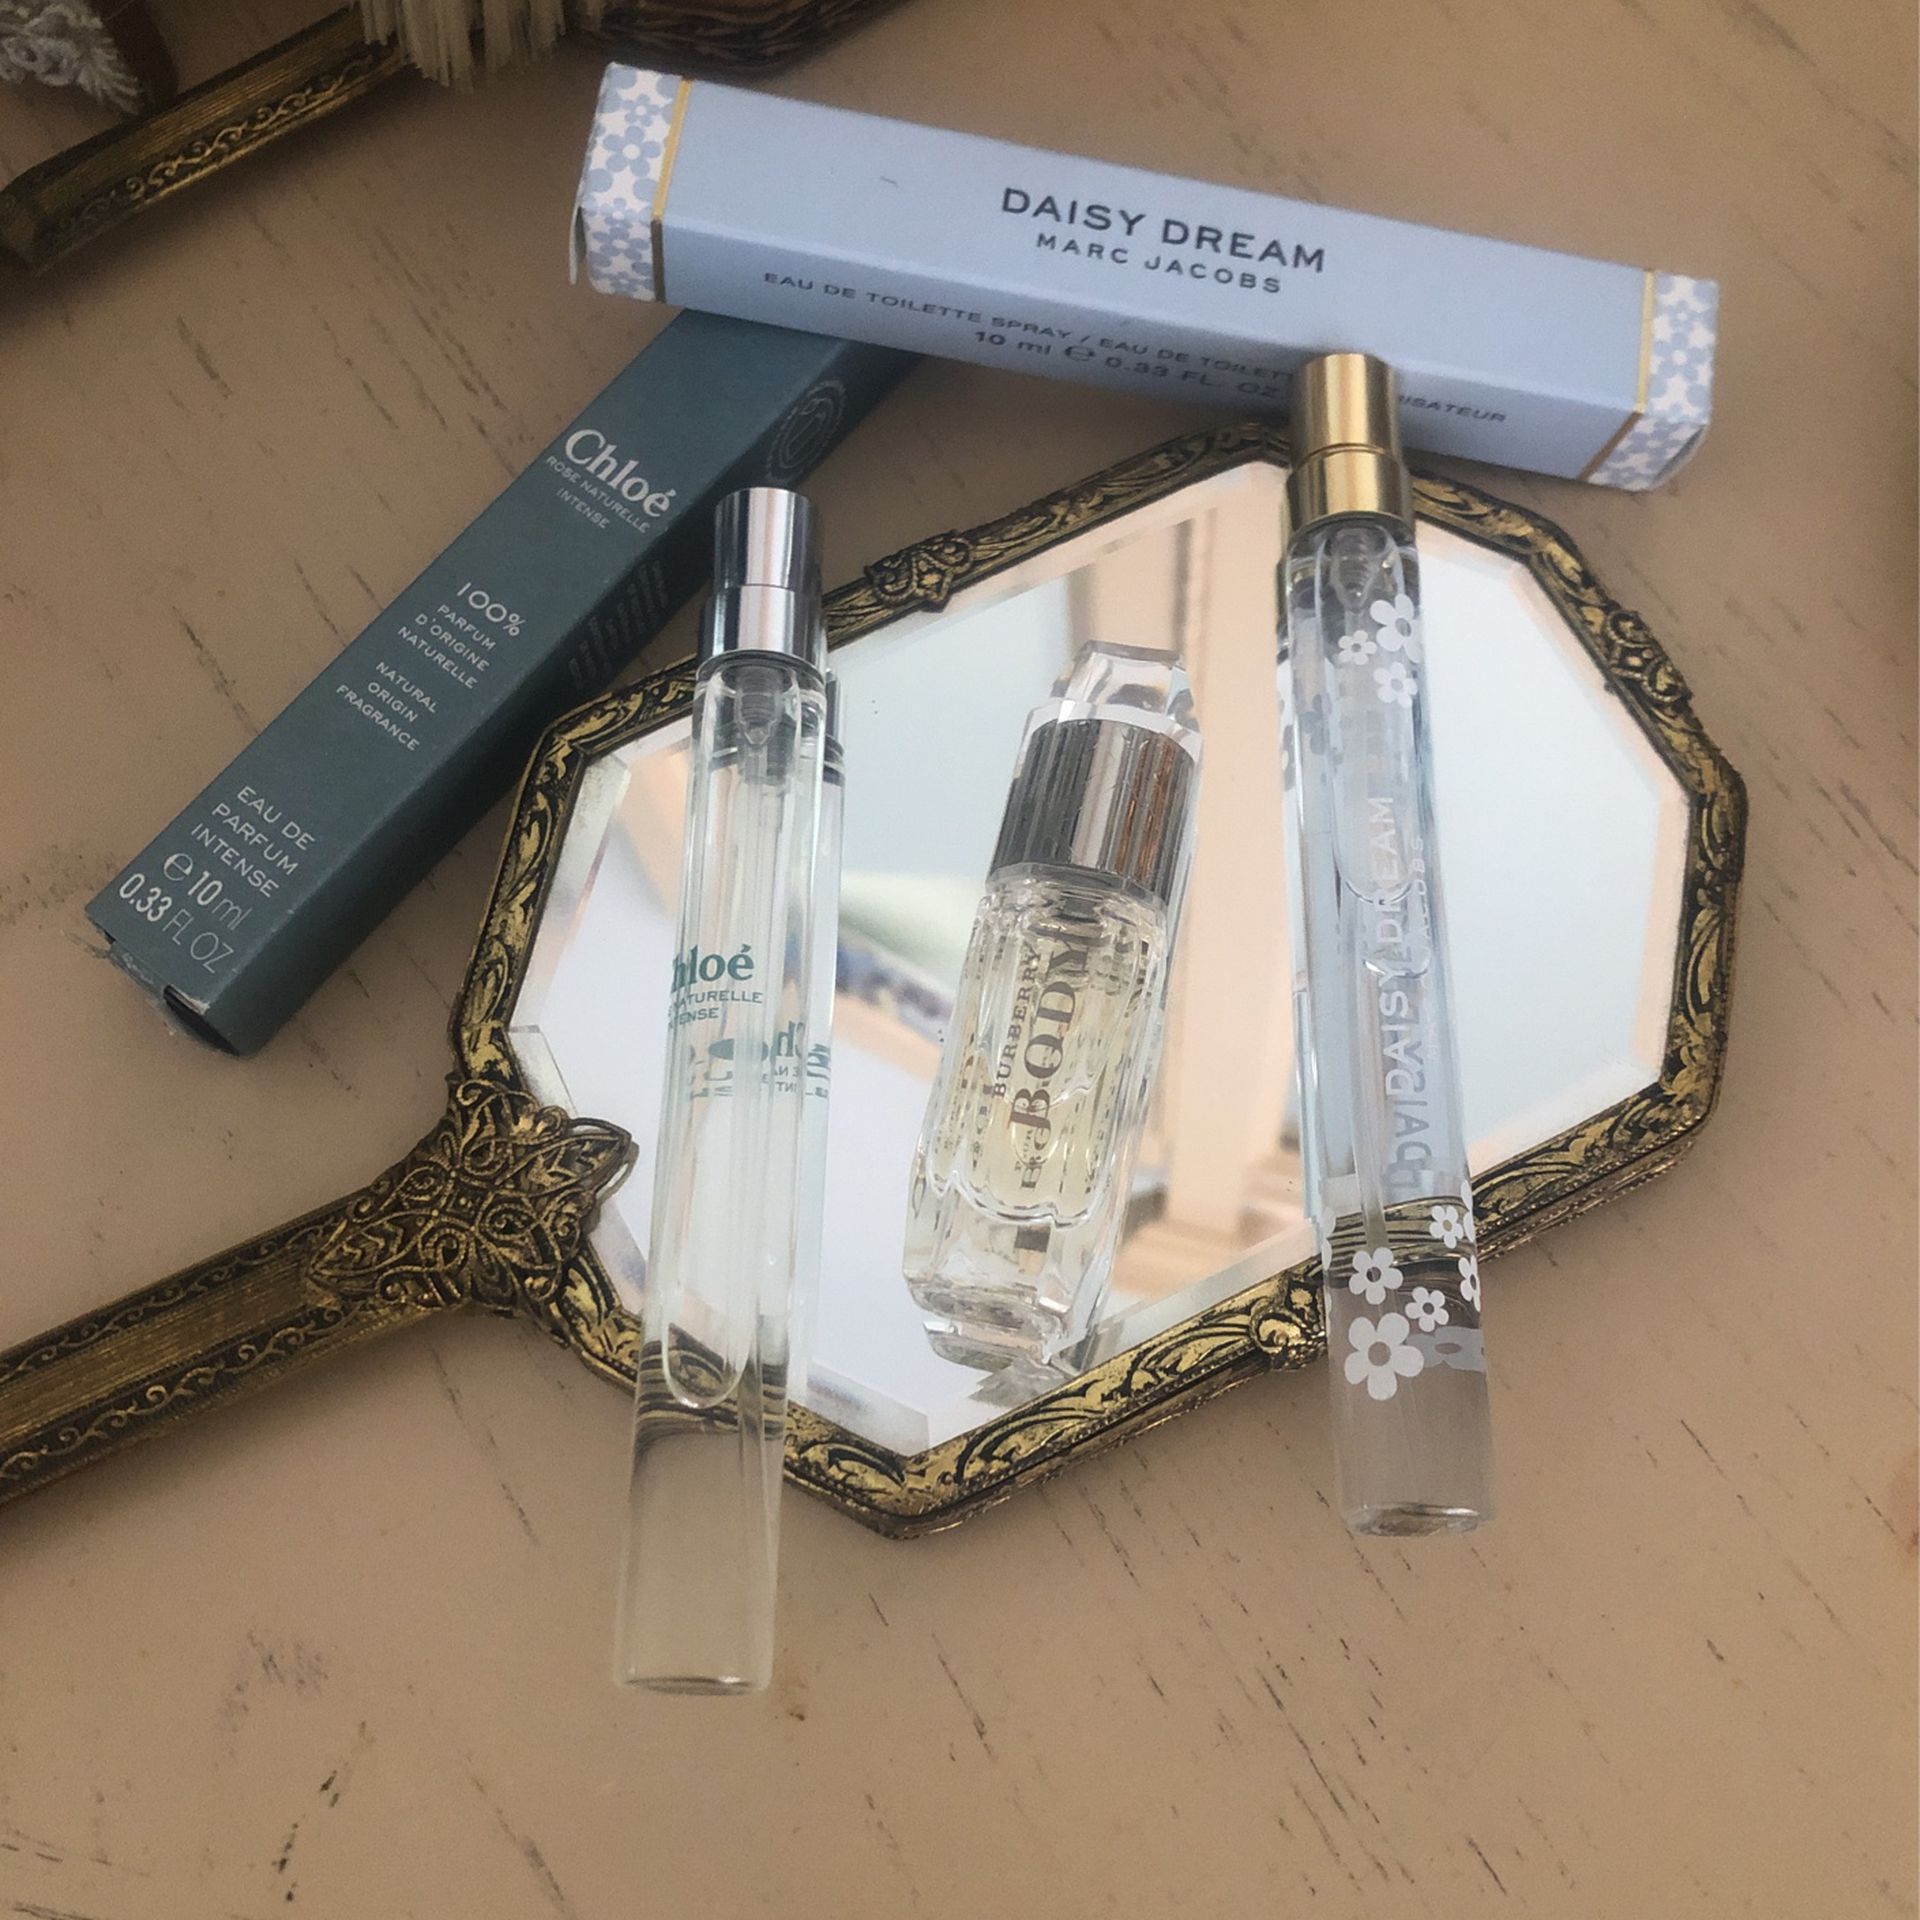 Parfum (3)Burberry Chloe https://offerup.co/faYXKzQFnY?$deeplink_path=/redirect/